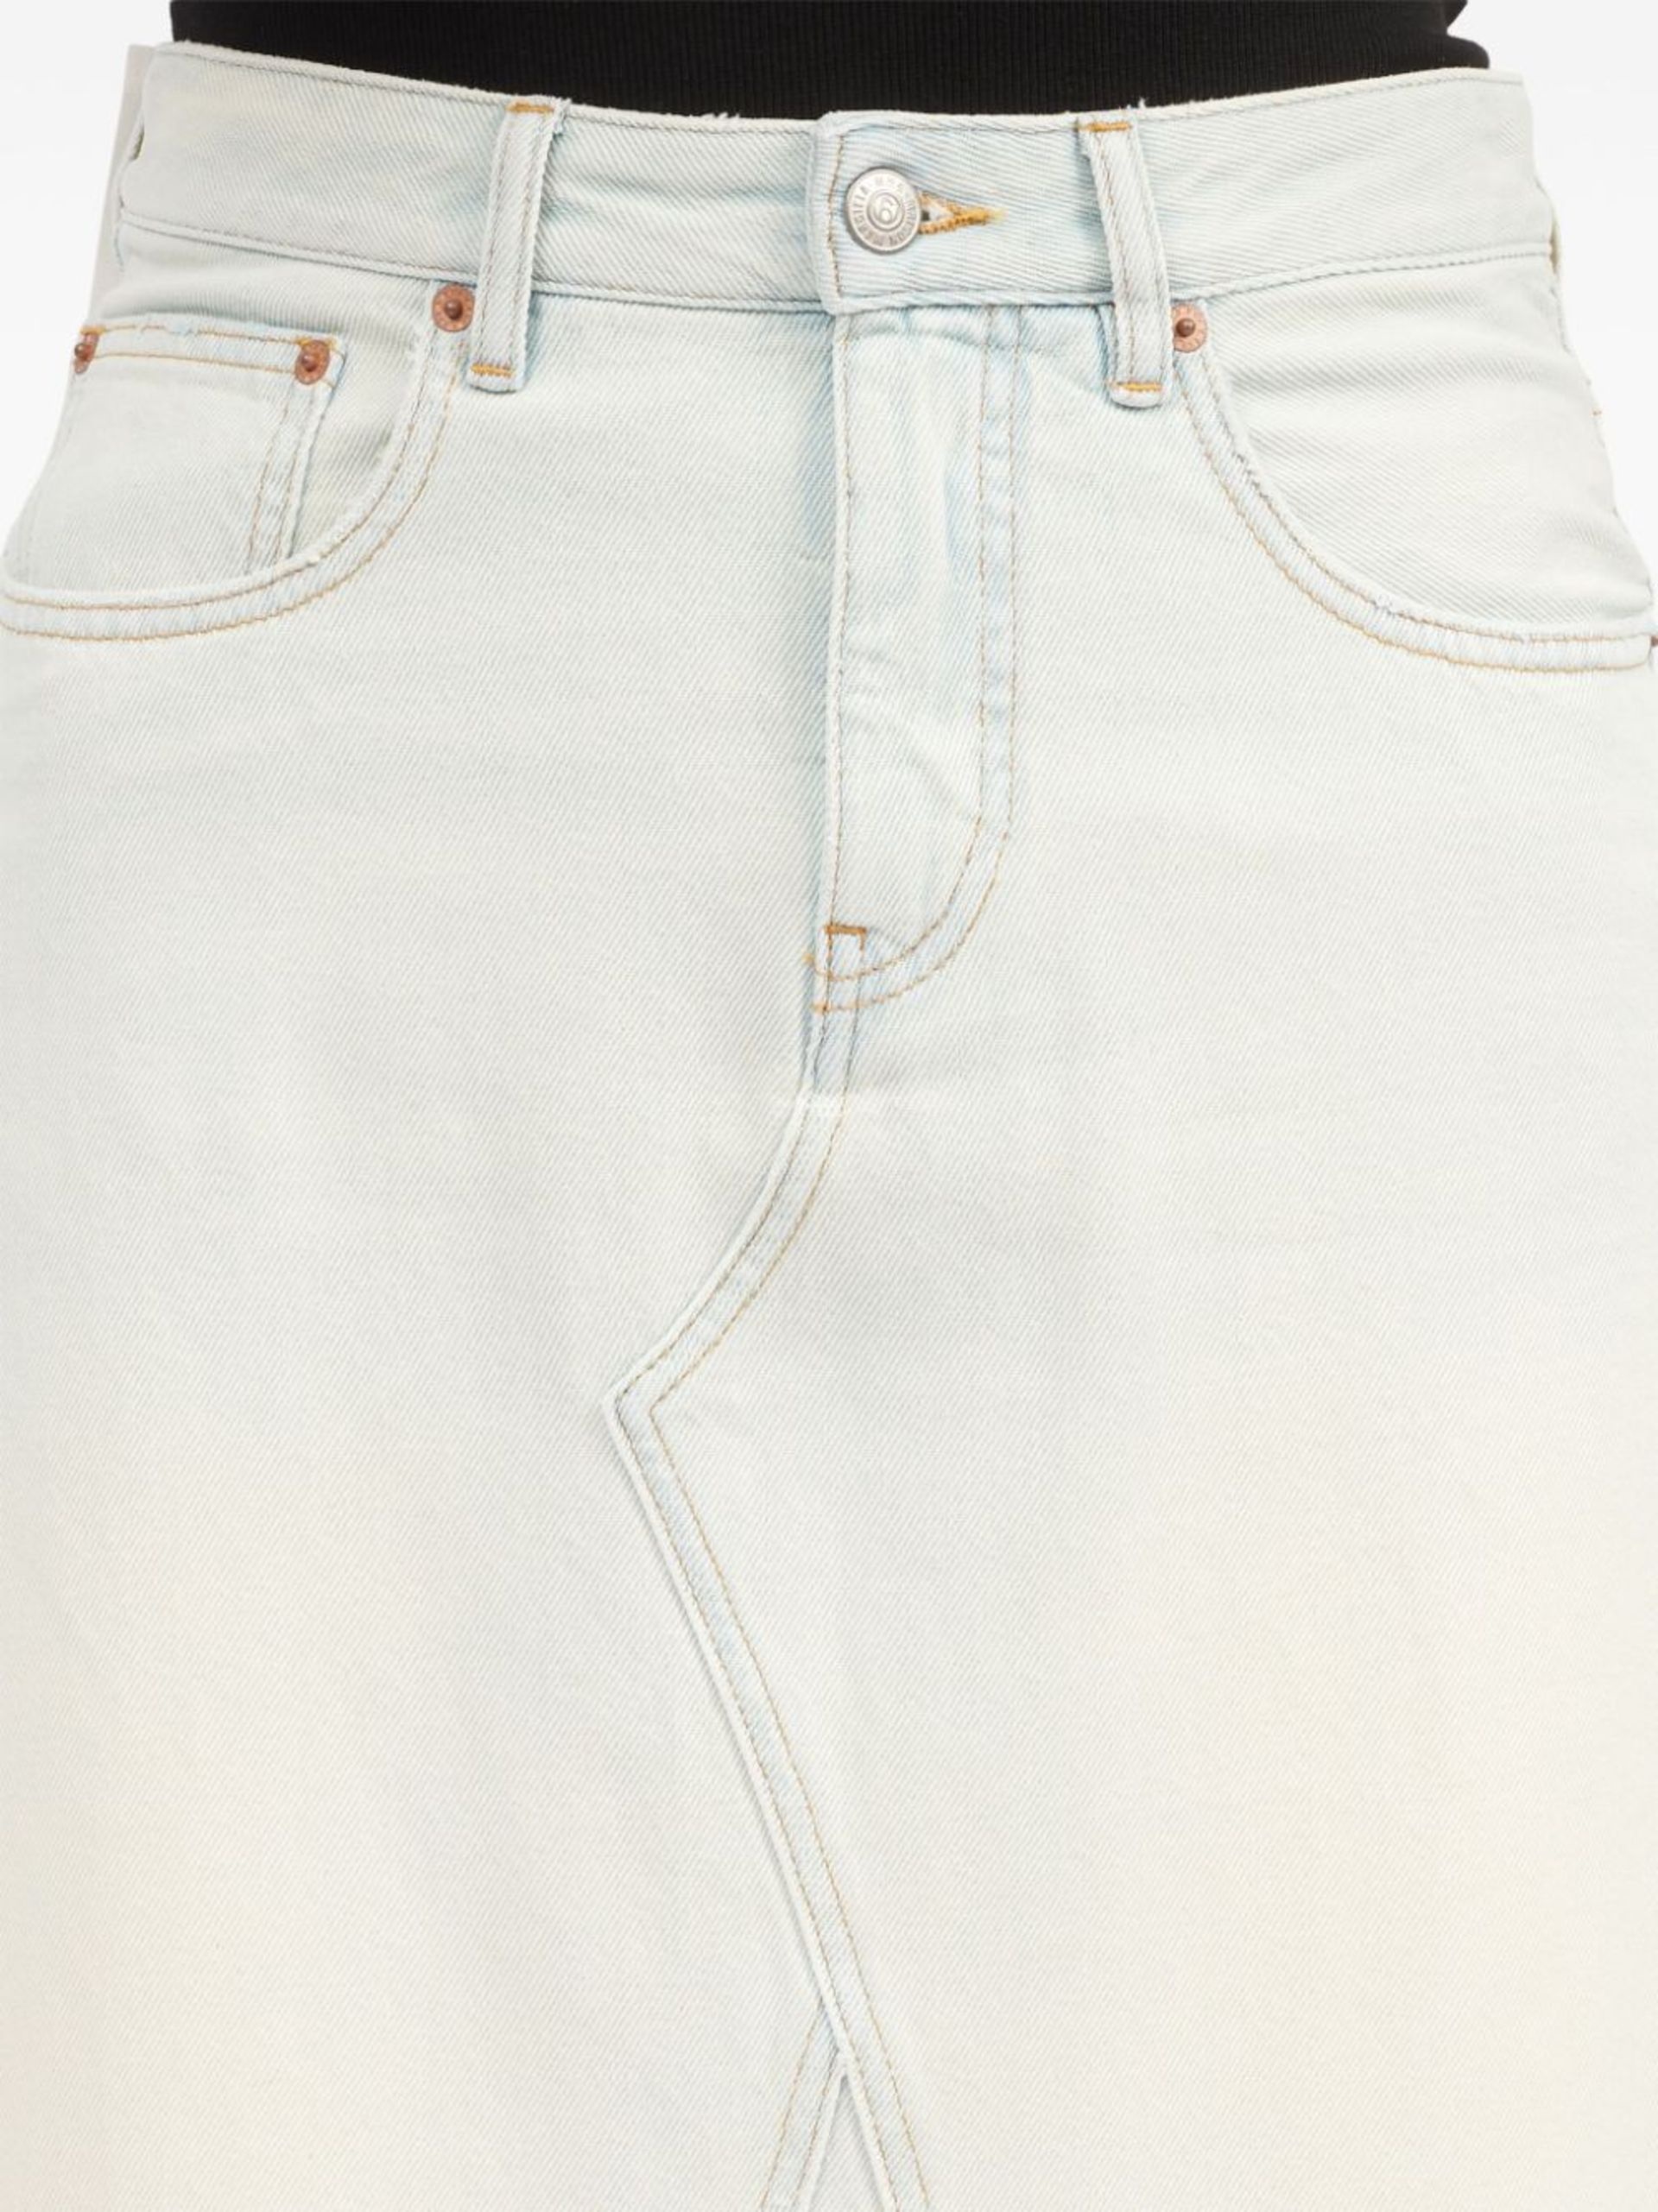 White A-Line Denim Maxi Skirt - 5